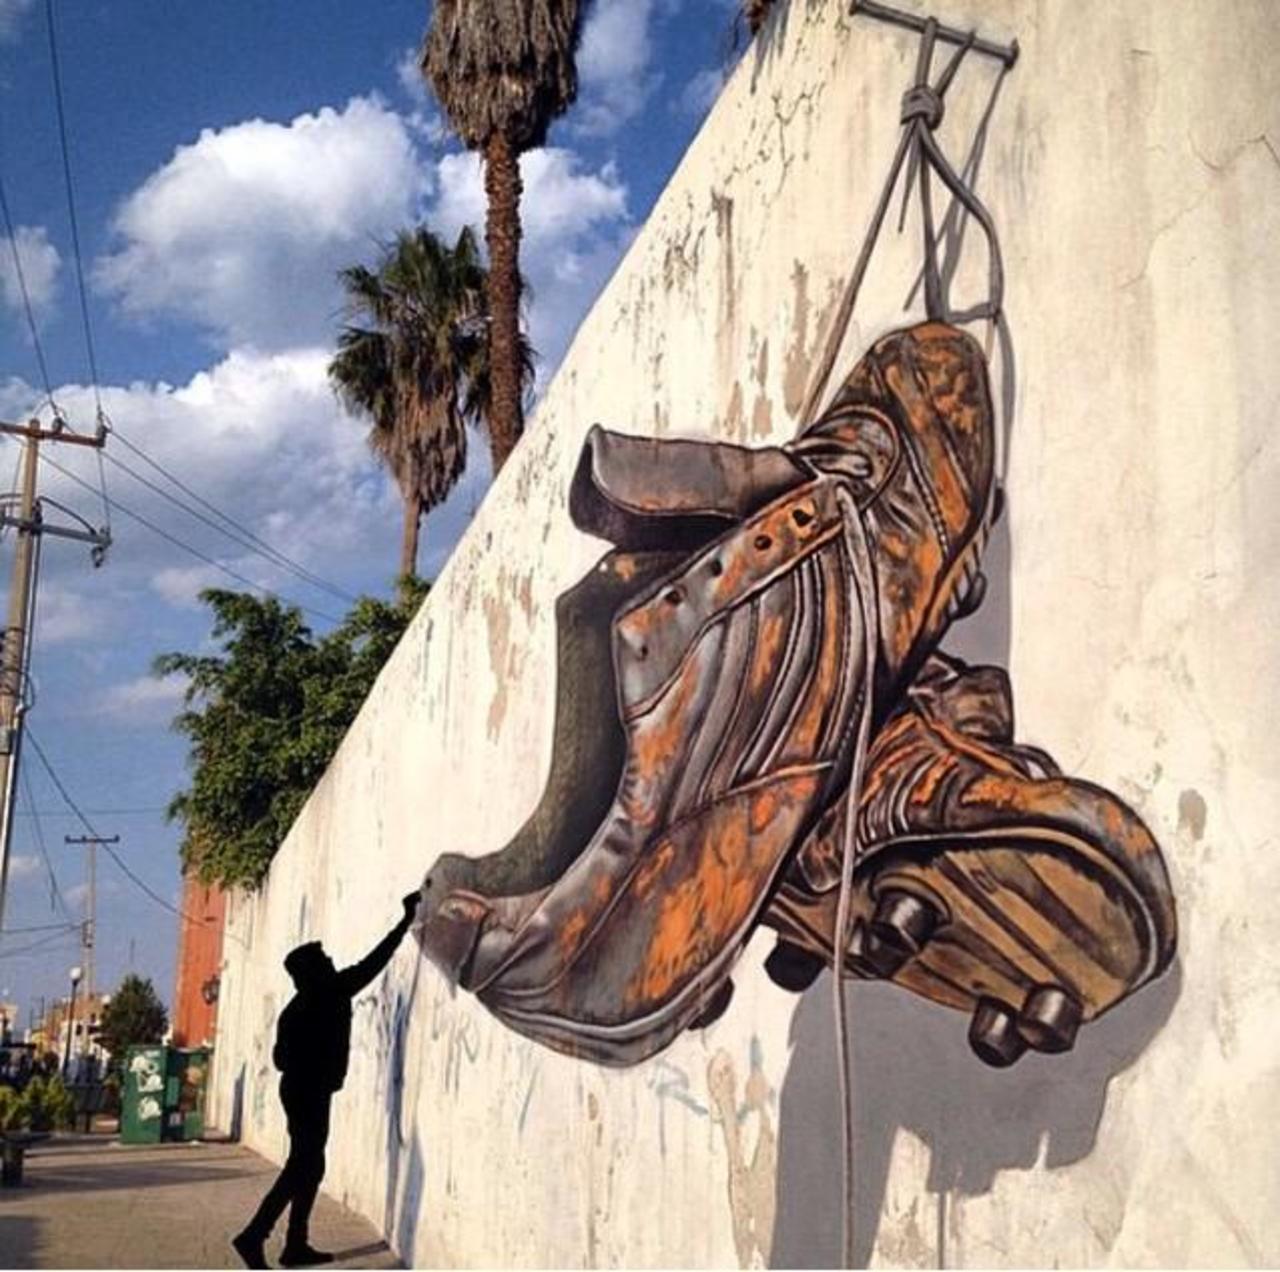 Awesome anamorphic 3D Street Art by Juandres Vera 

#art #graffiti #mural #streetart http://t.co/wz4lit3tMo